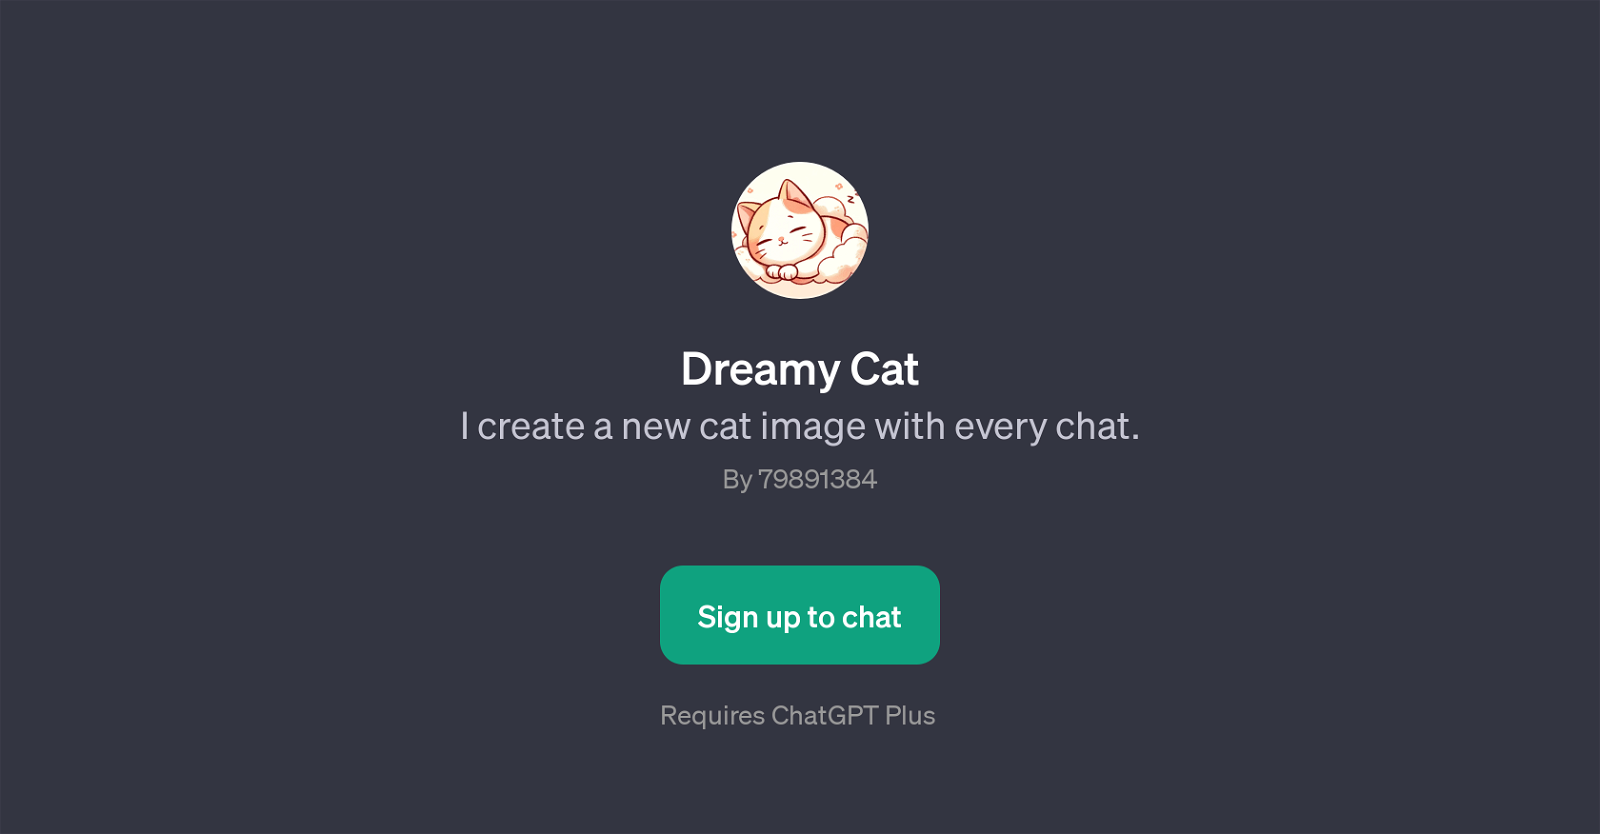 Dreamy Cat website